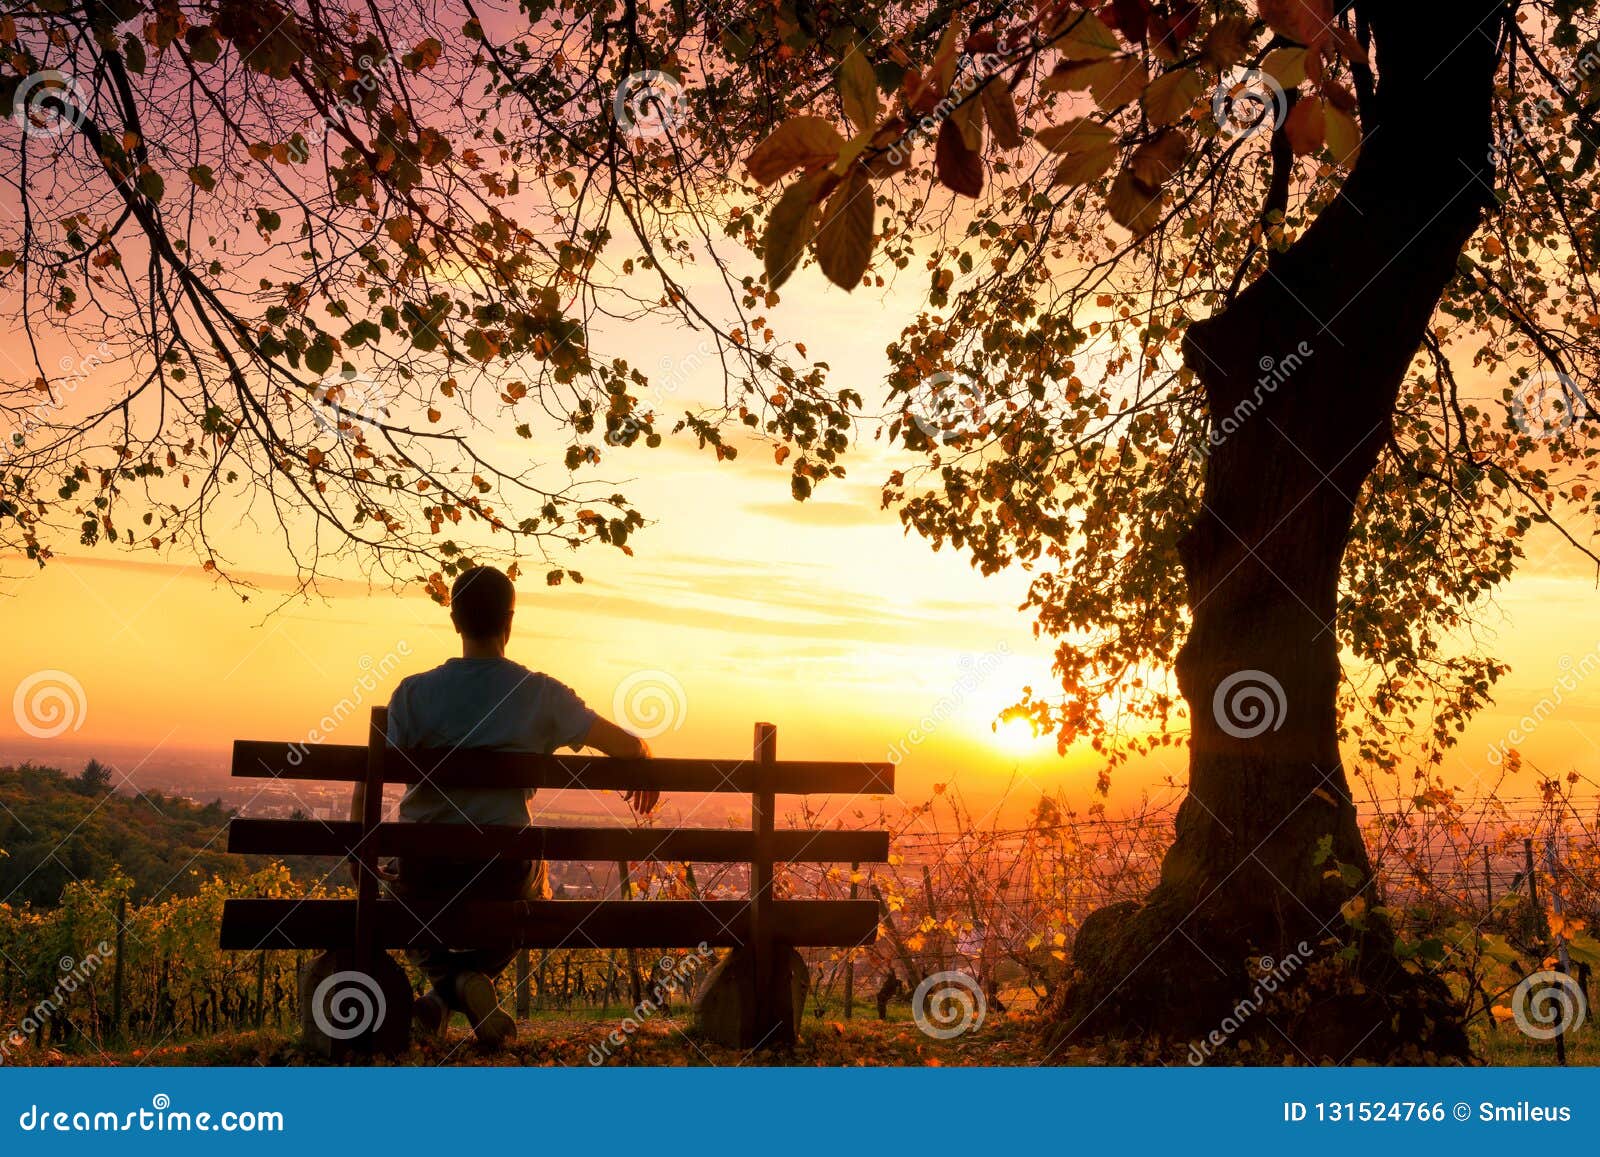 Man Sitting On Bench Silhouette.